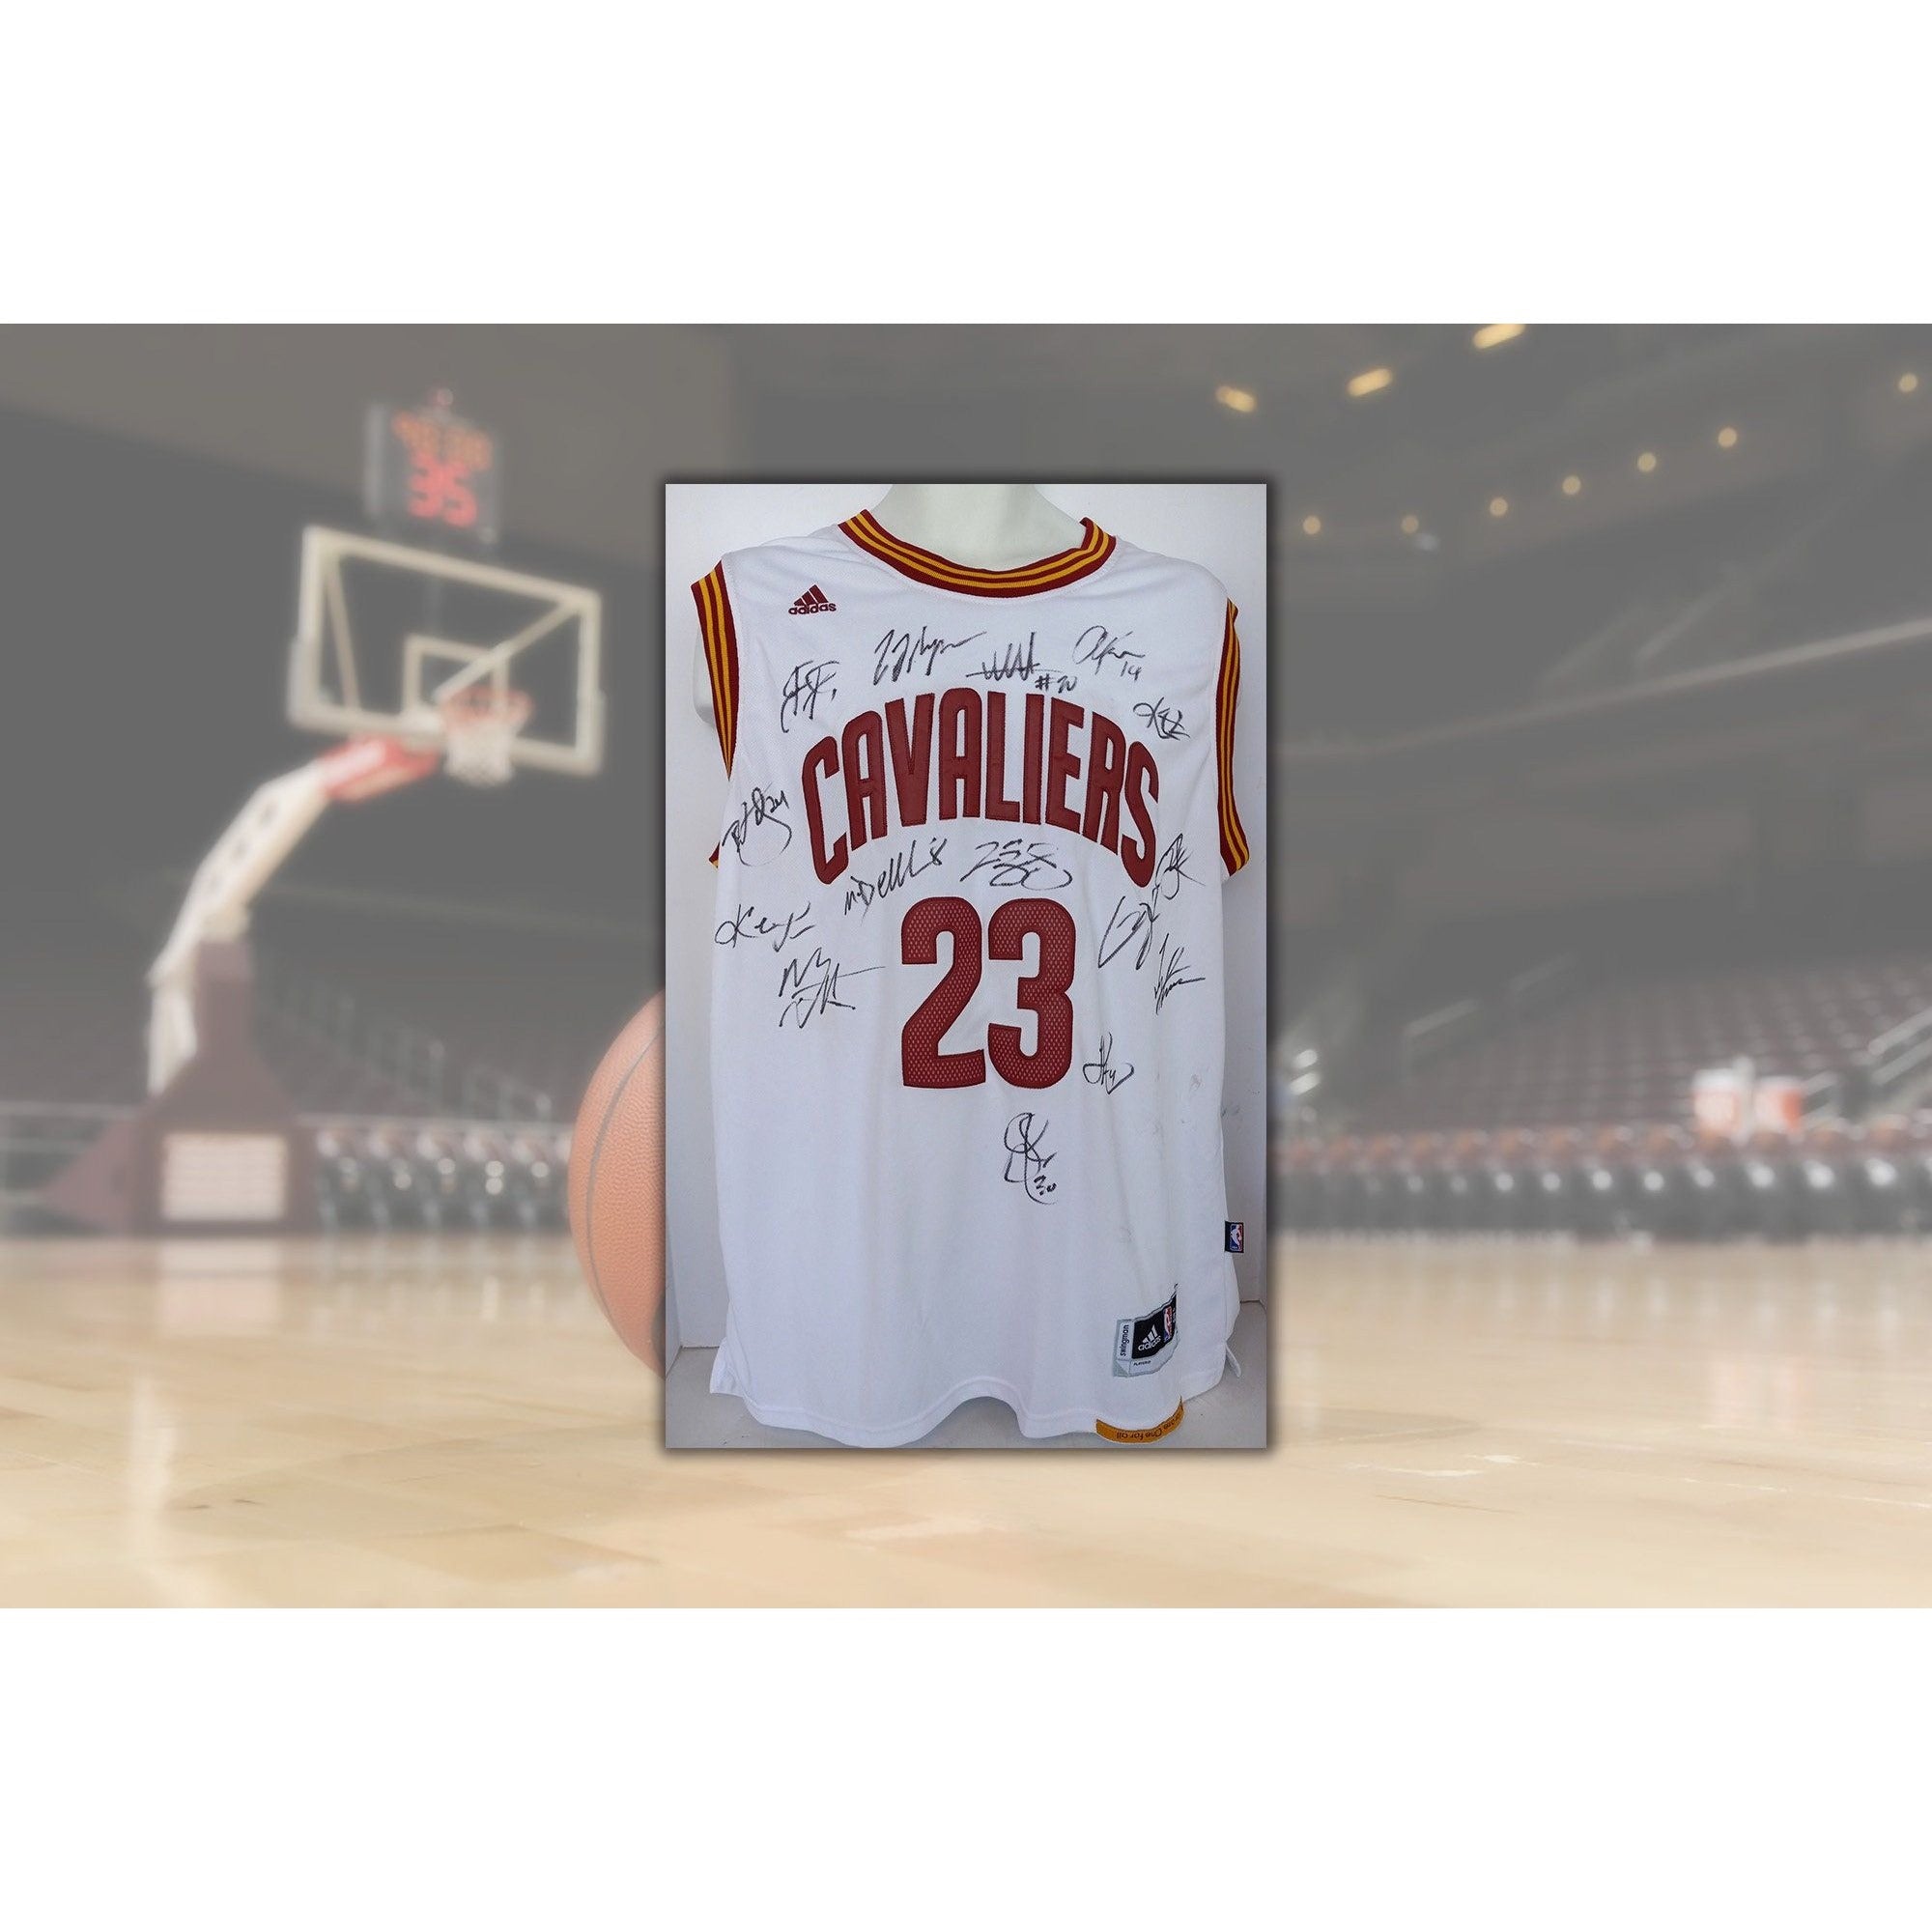 Cleveland Cavaliers LeBron James Adidas NBA jersey